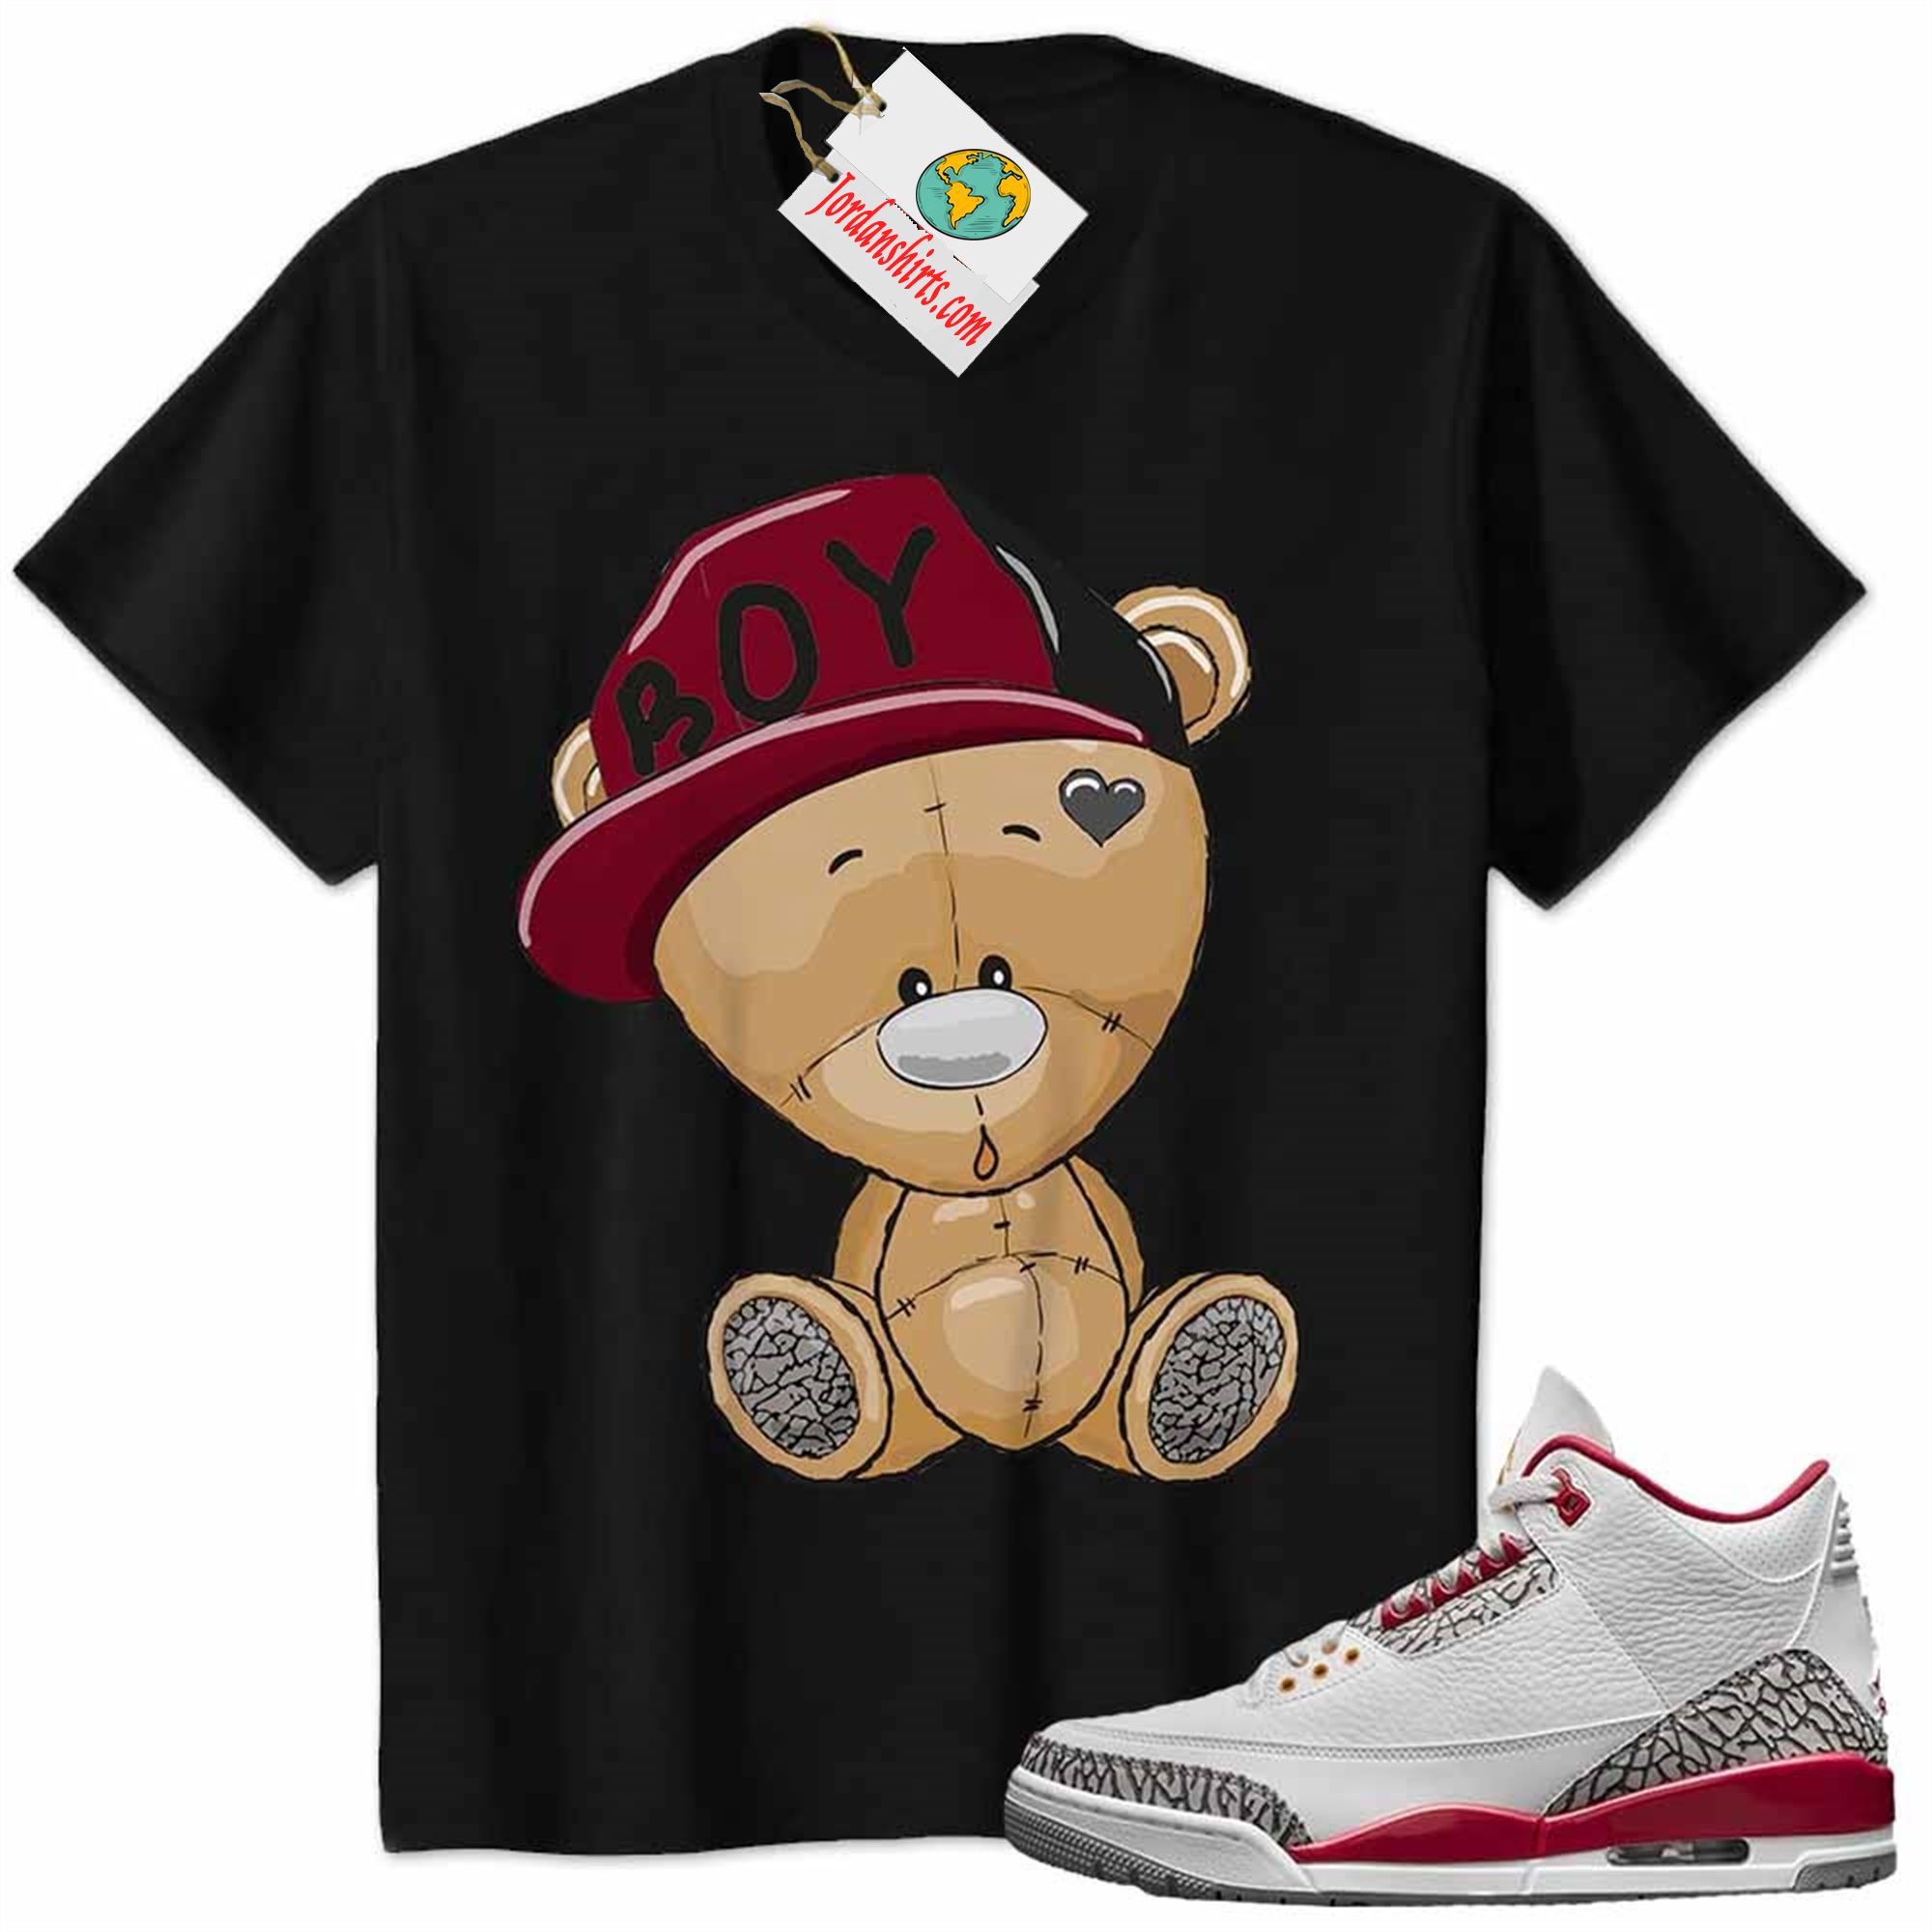 Jordan 3 Shirt, Jordan 3 Cardinal Red Shirt Cute Baby Teddy Bear Black Full Size Up To 5xl